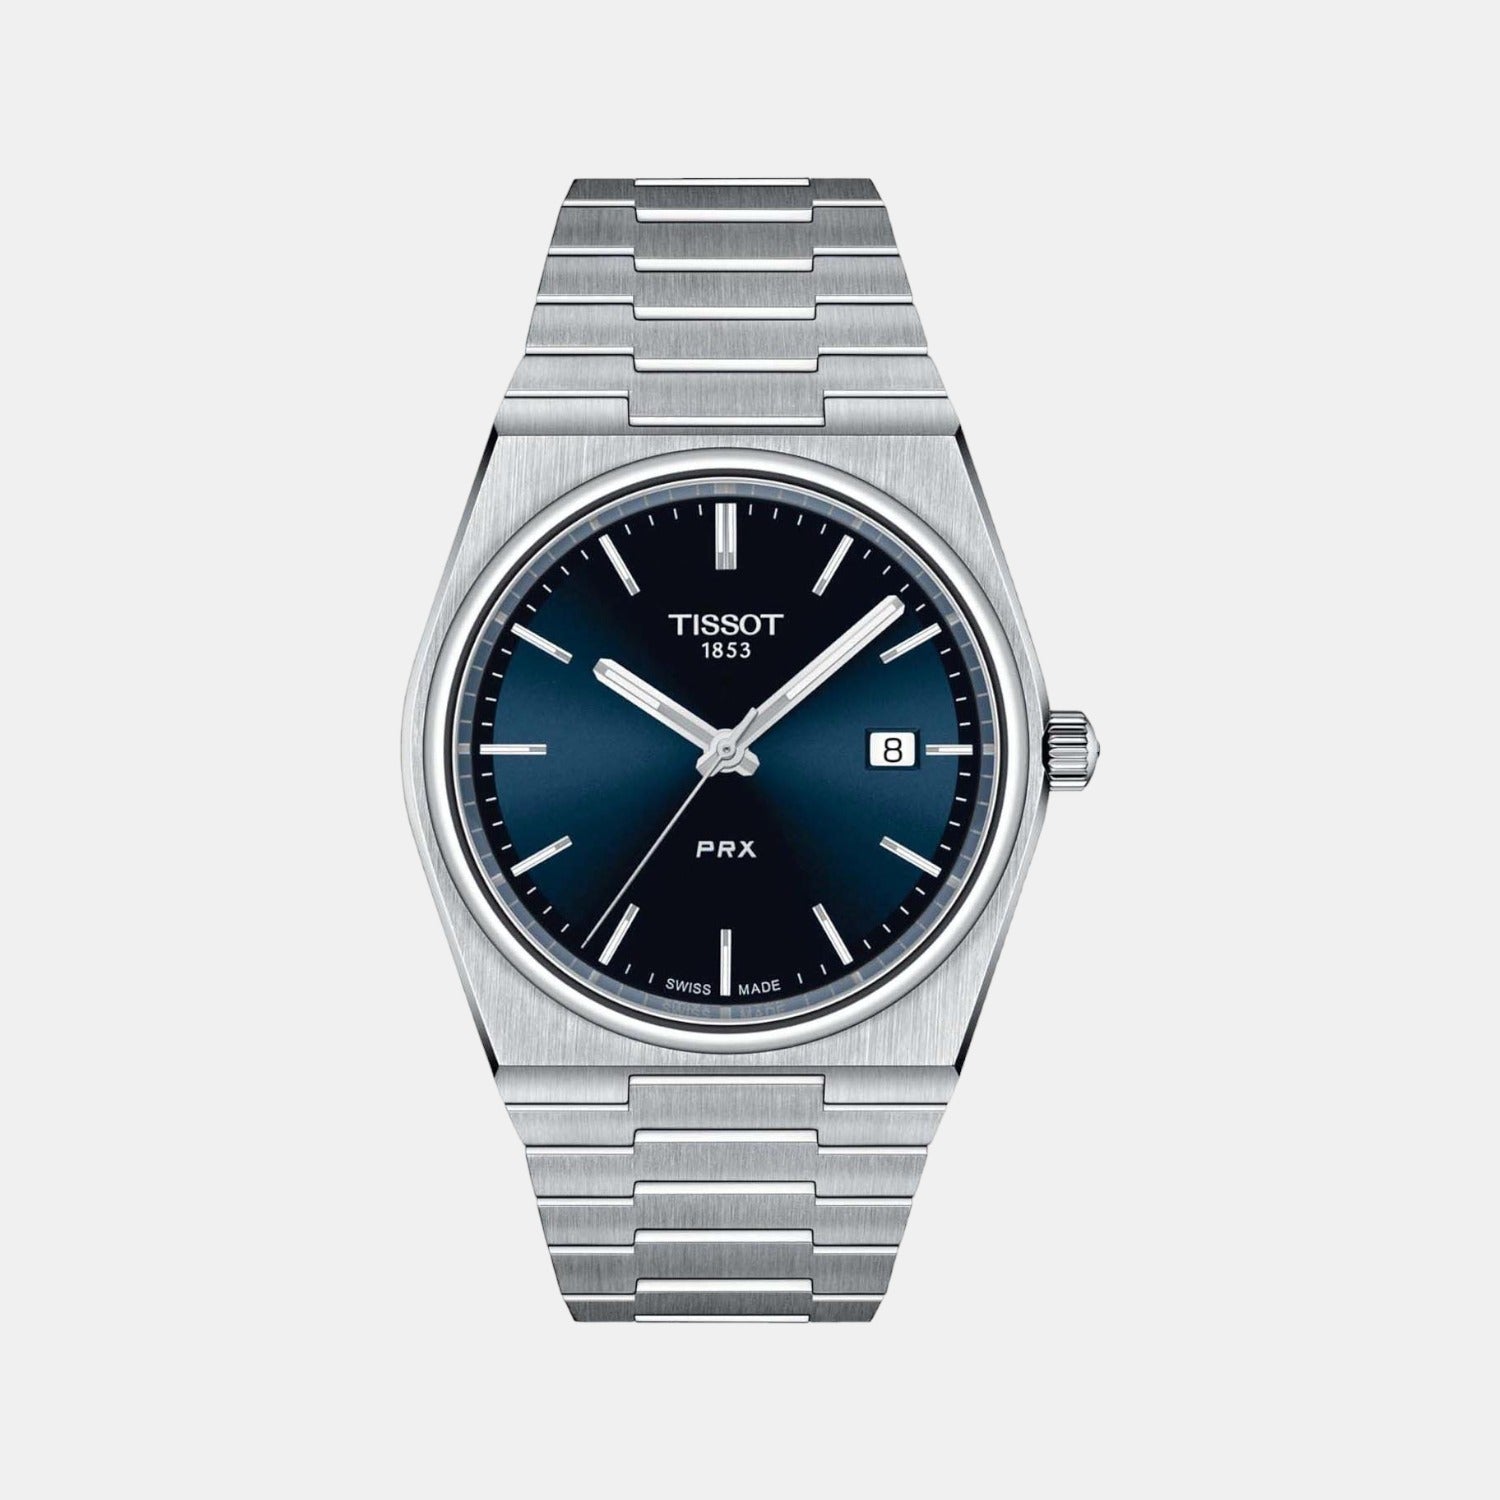 New Tissot PRX Automatic Chronograph White Dial Men's Watch  T137.427.11.011.00 | eBay